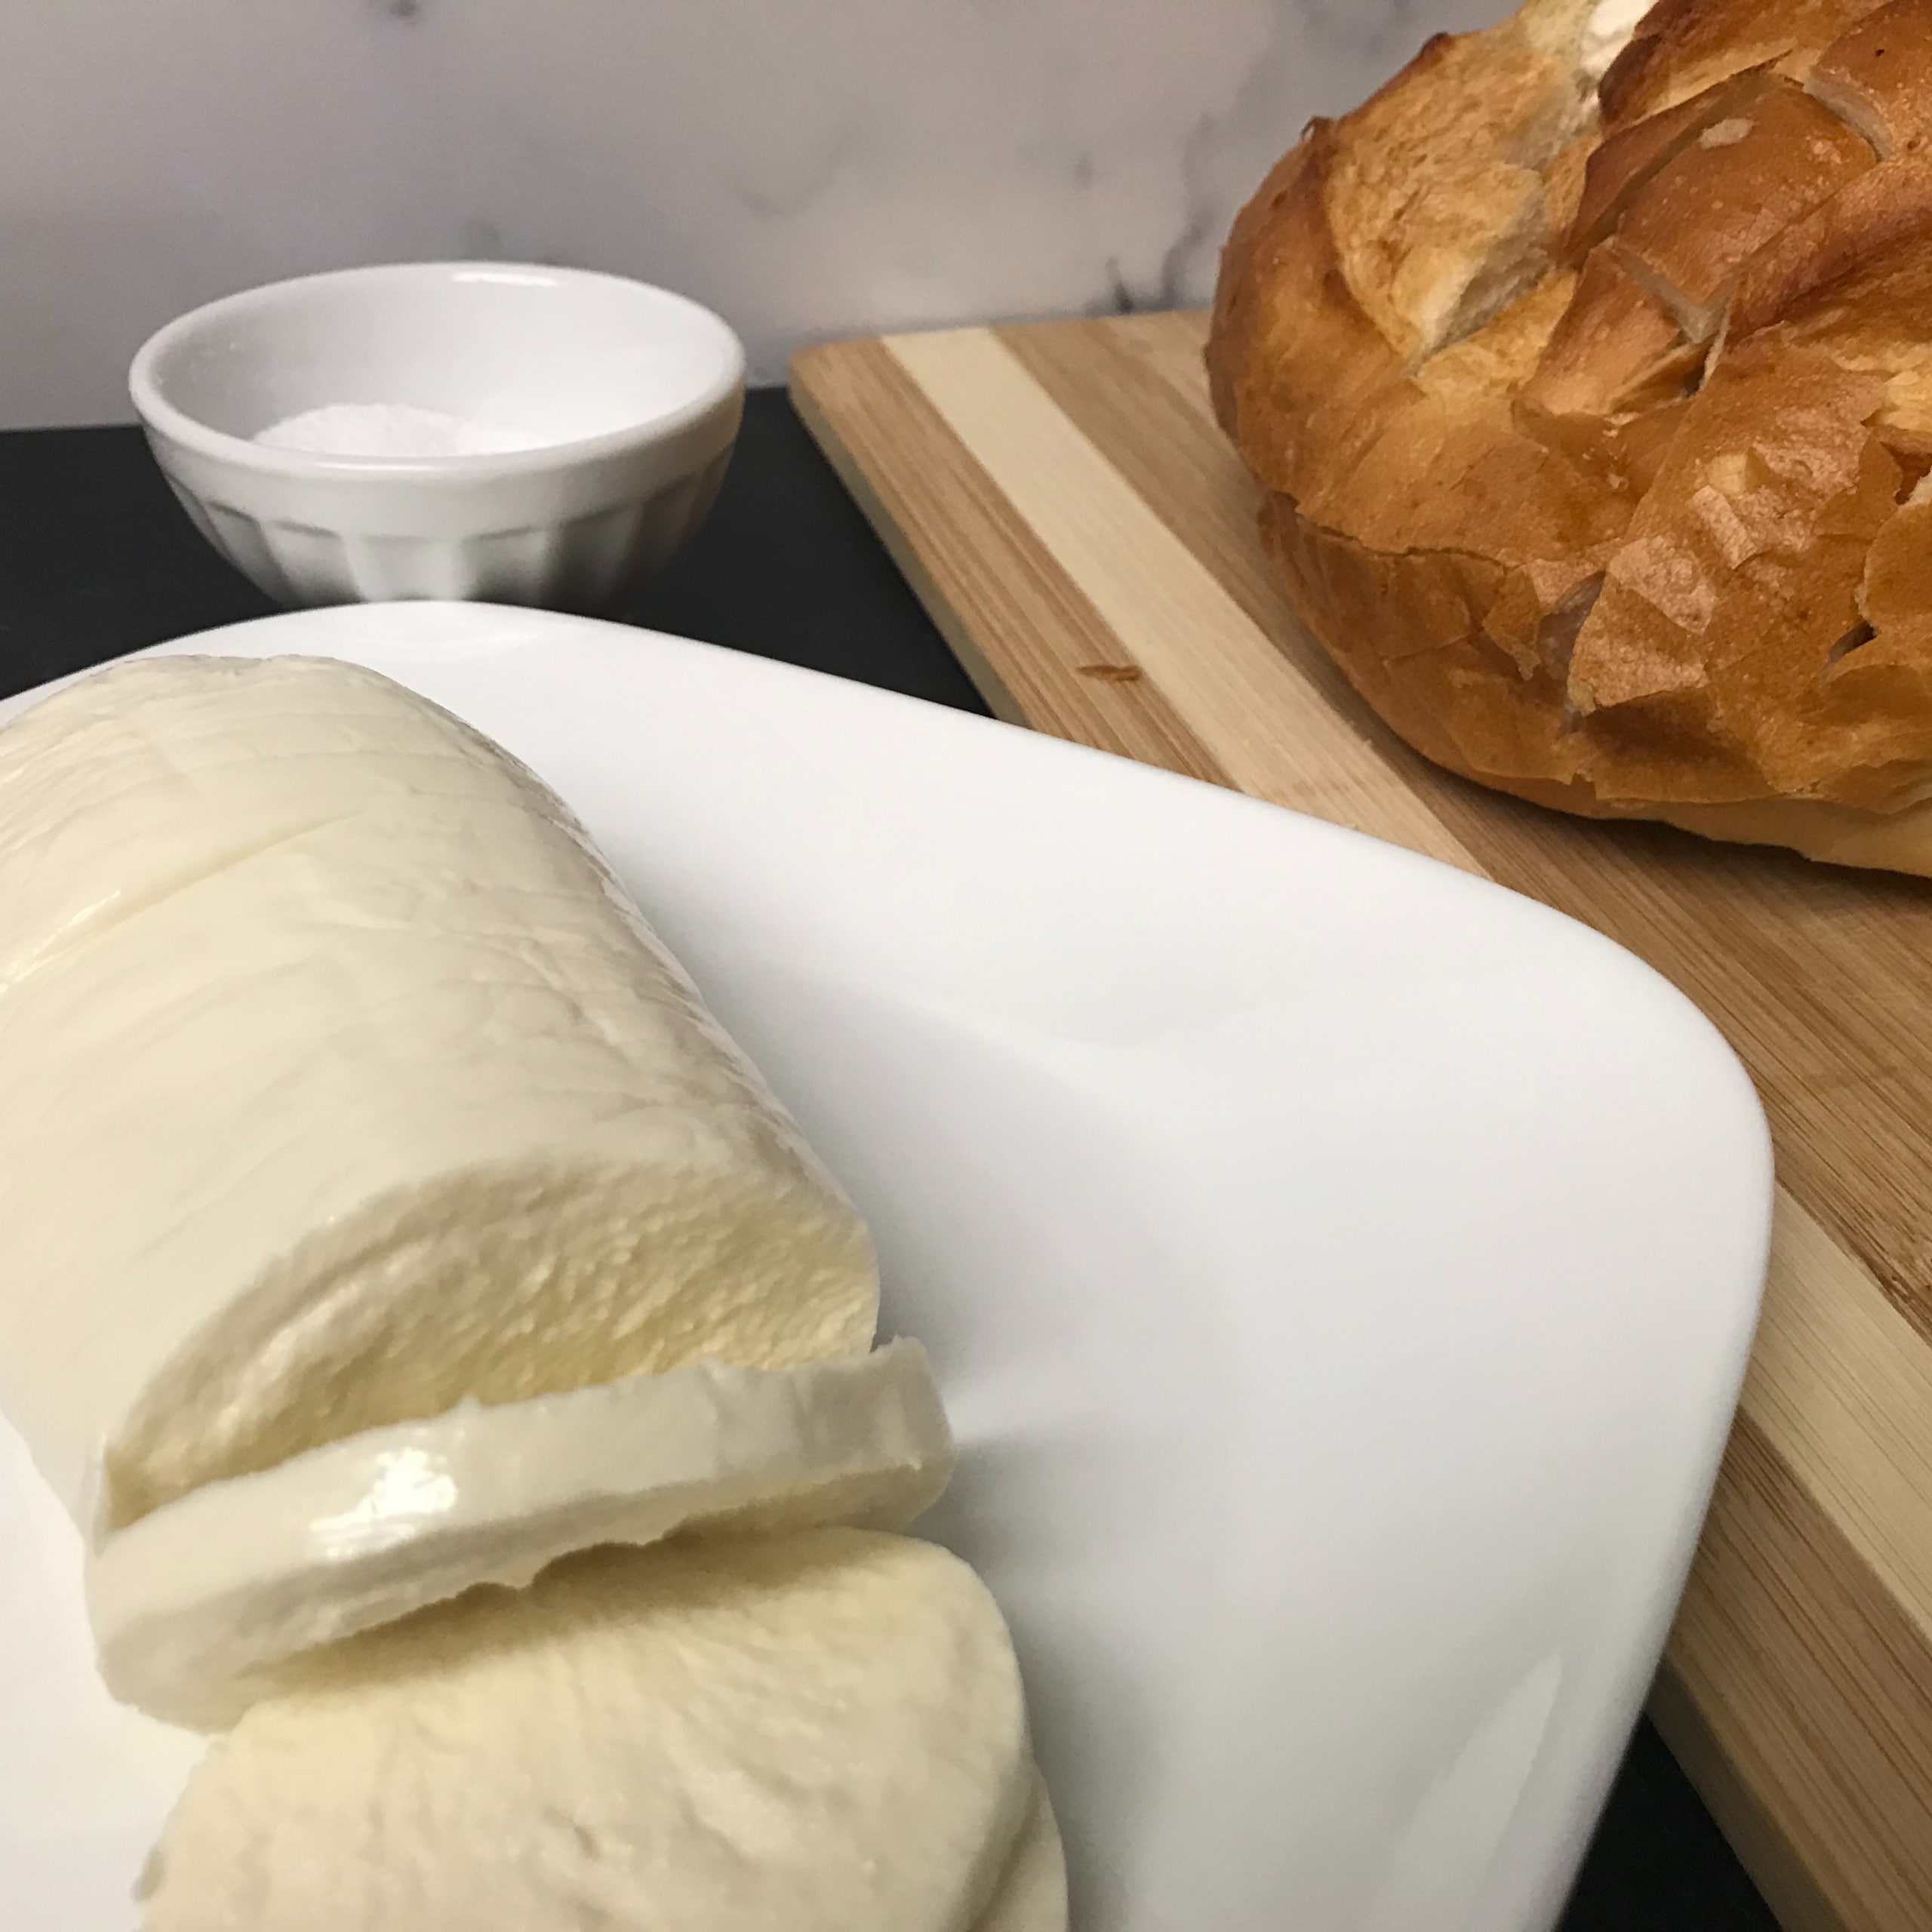 Cheesy Pull Bread | My Curated Tastes